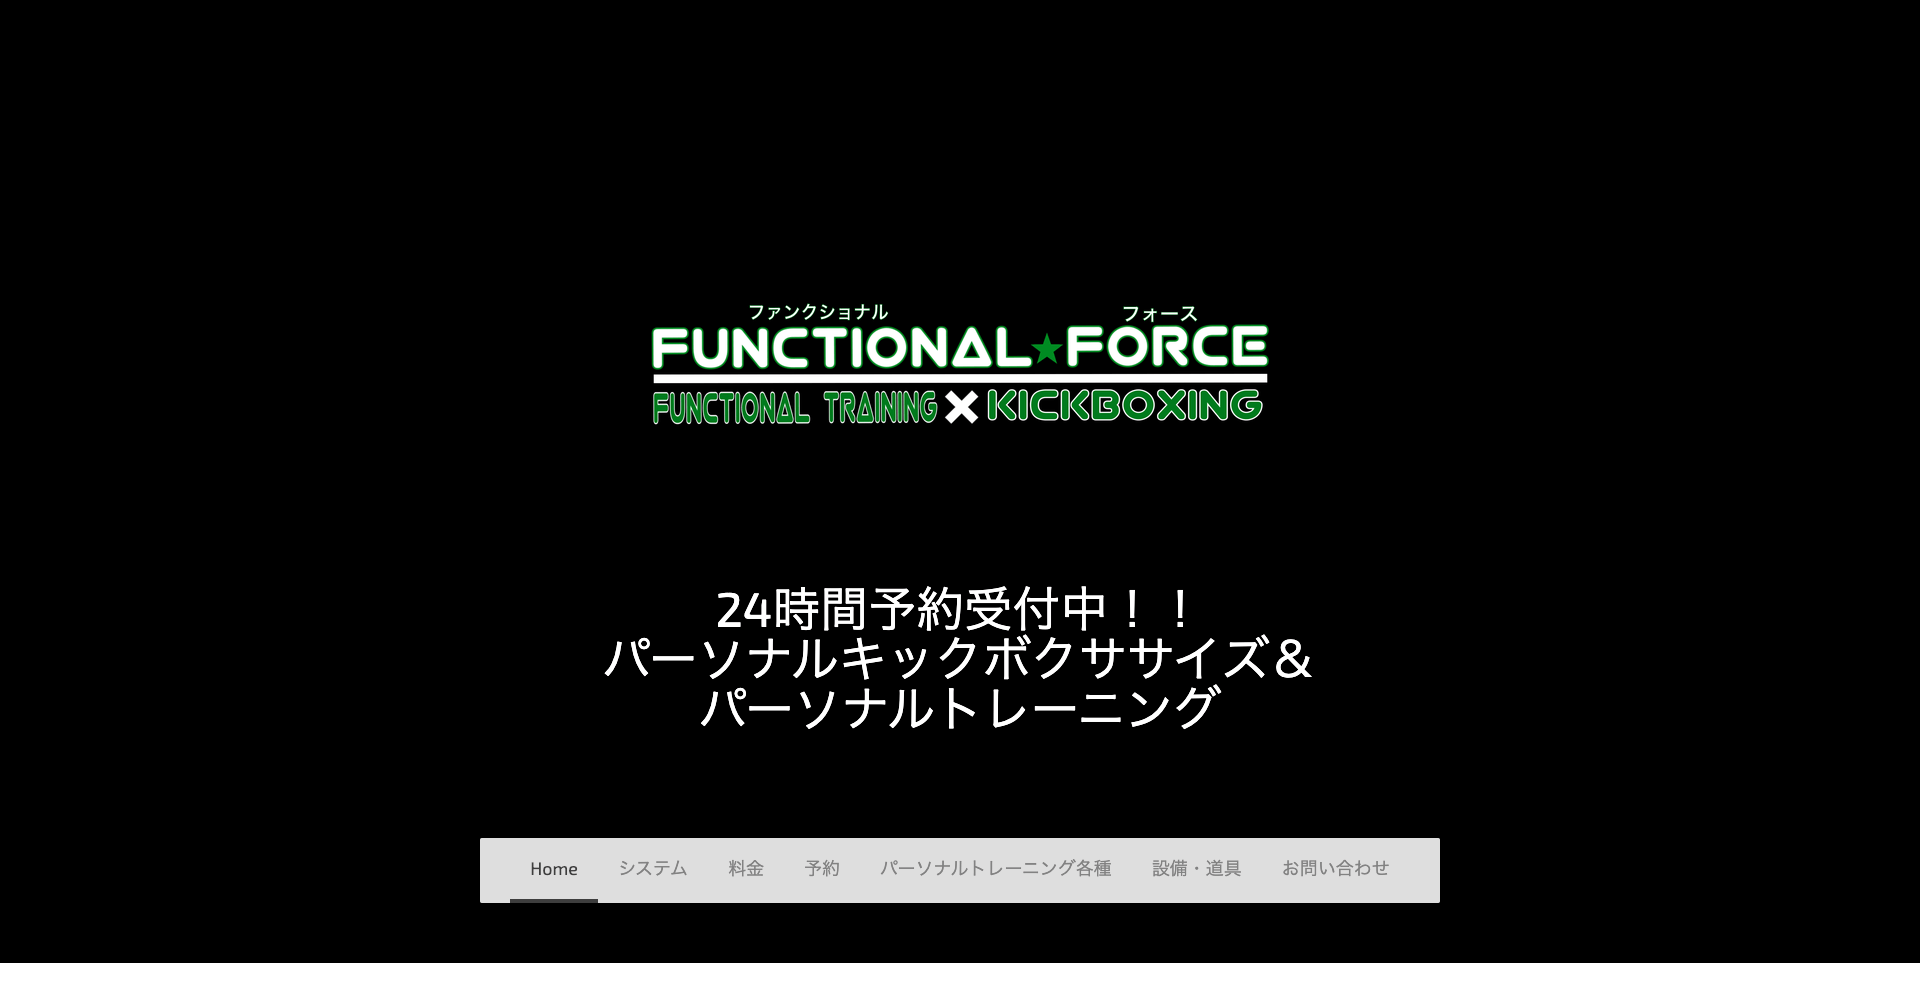 Functional force (ファンクショナルフォース)